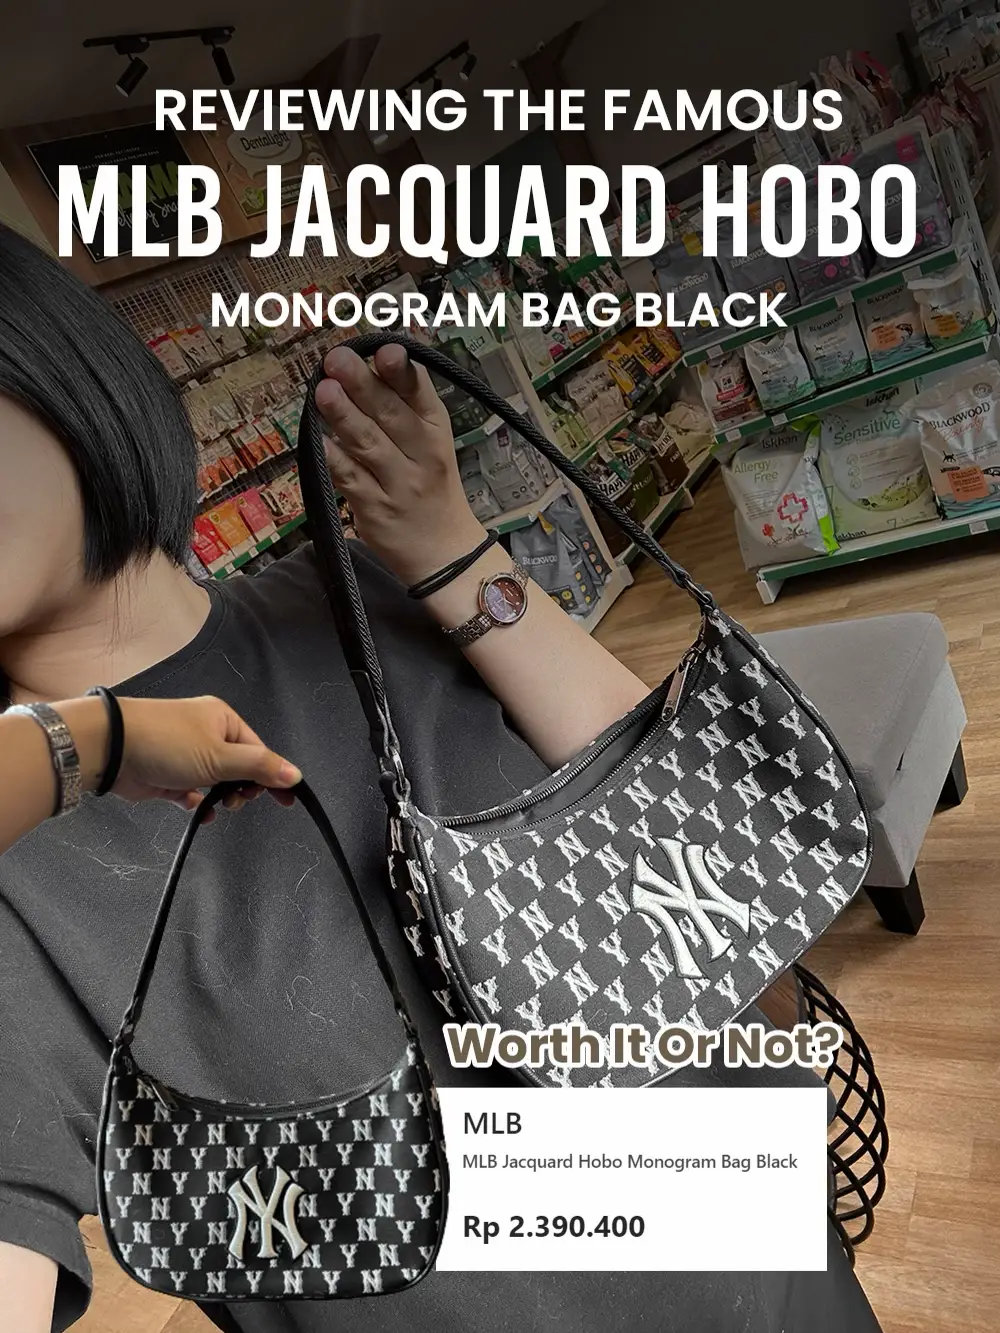 REVIEW MLB JACQUARD HOBO MONOGRAM BLACK BAG, Gallery posted by Grace  Harlequin